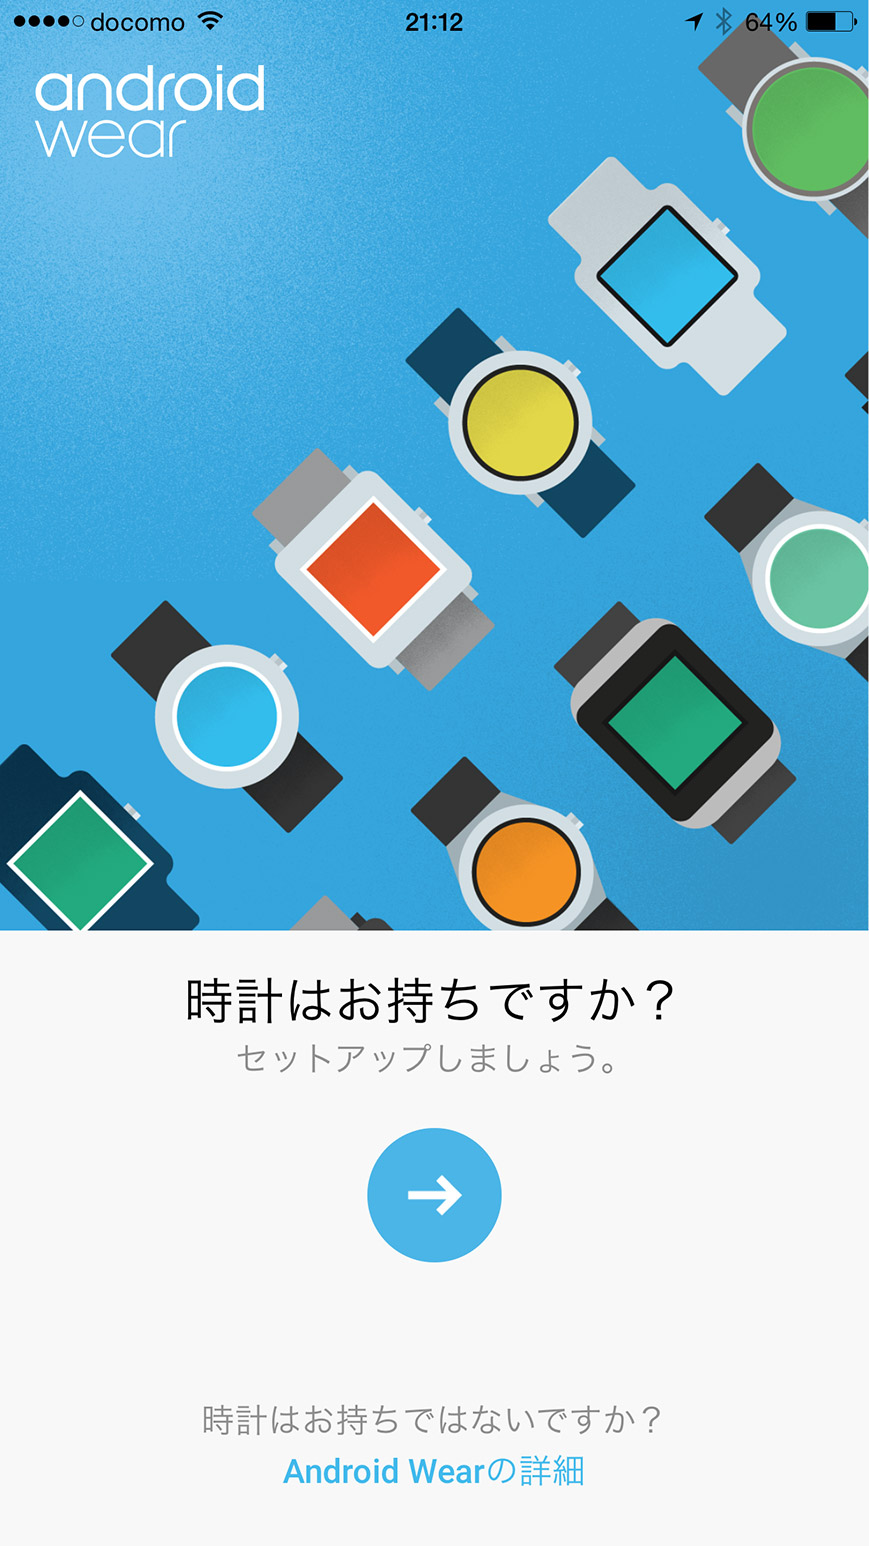 Ediho S Memogram Blog 公式 Ios Android Wear アプリ で Moto360 を